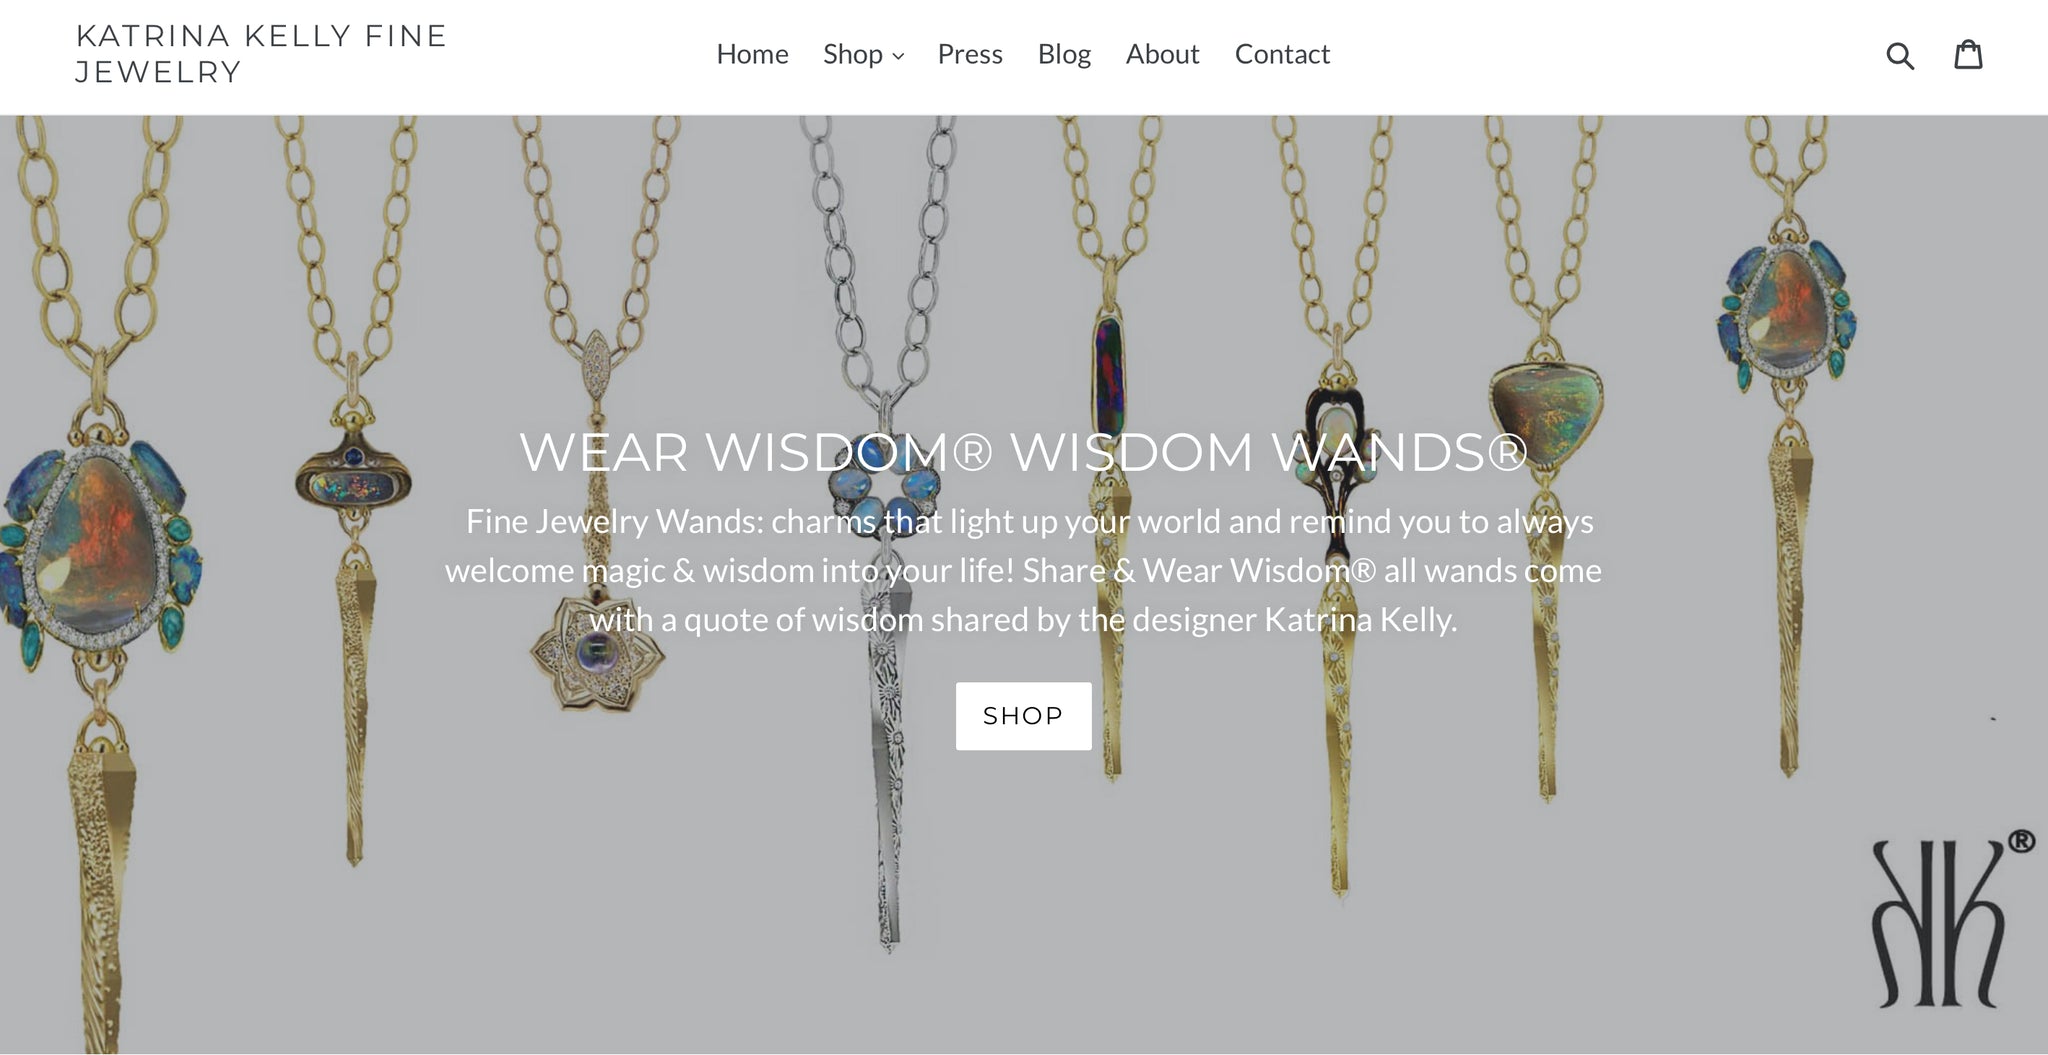 Fine Jewelry Designer Katrina Kelly's One-of-a-Kind Gold Jewelry Wand Charms